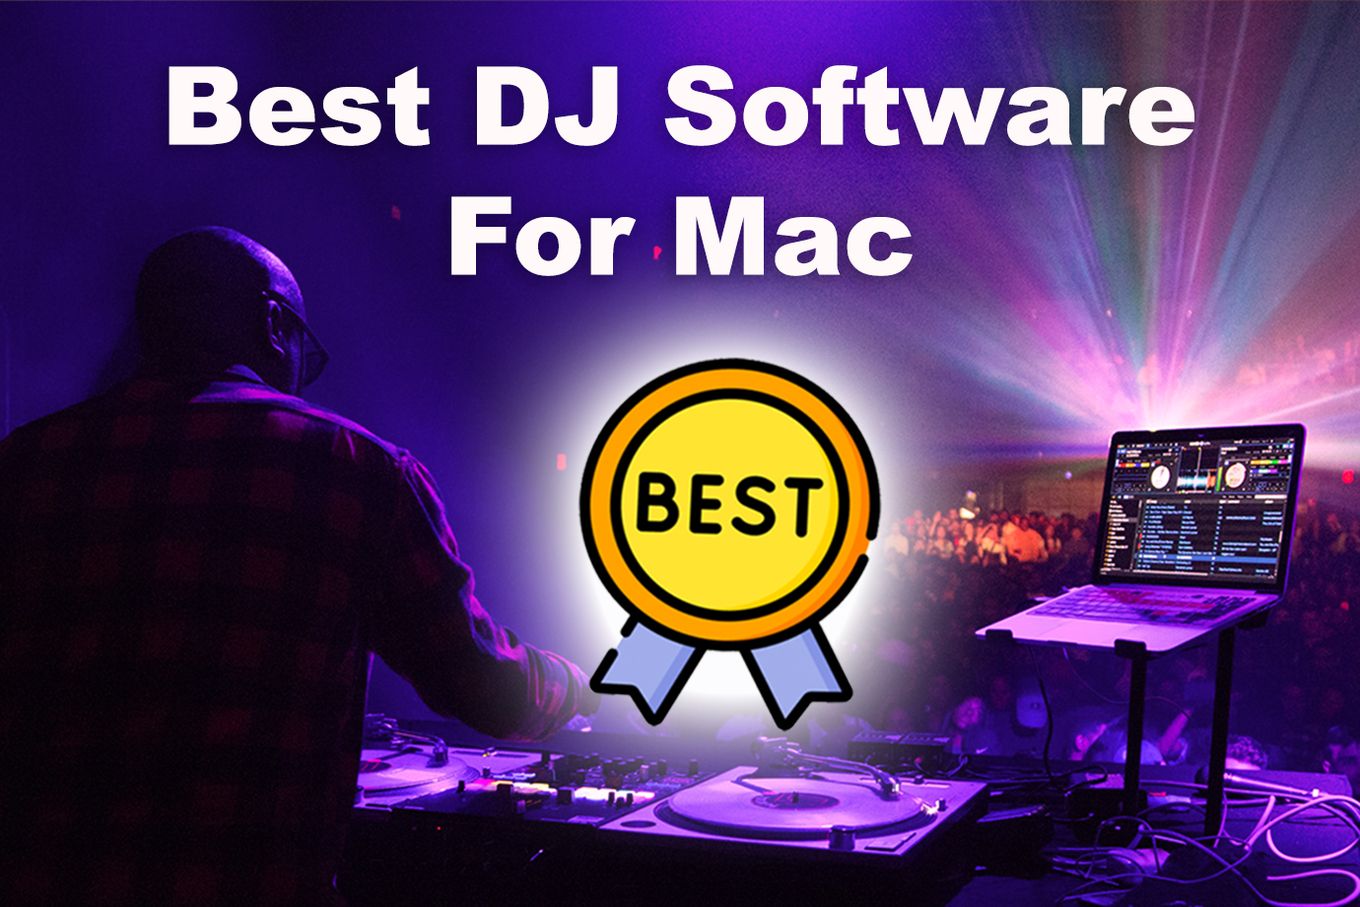 dj software mac free download full version